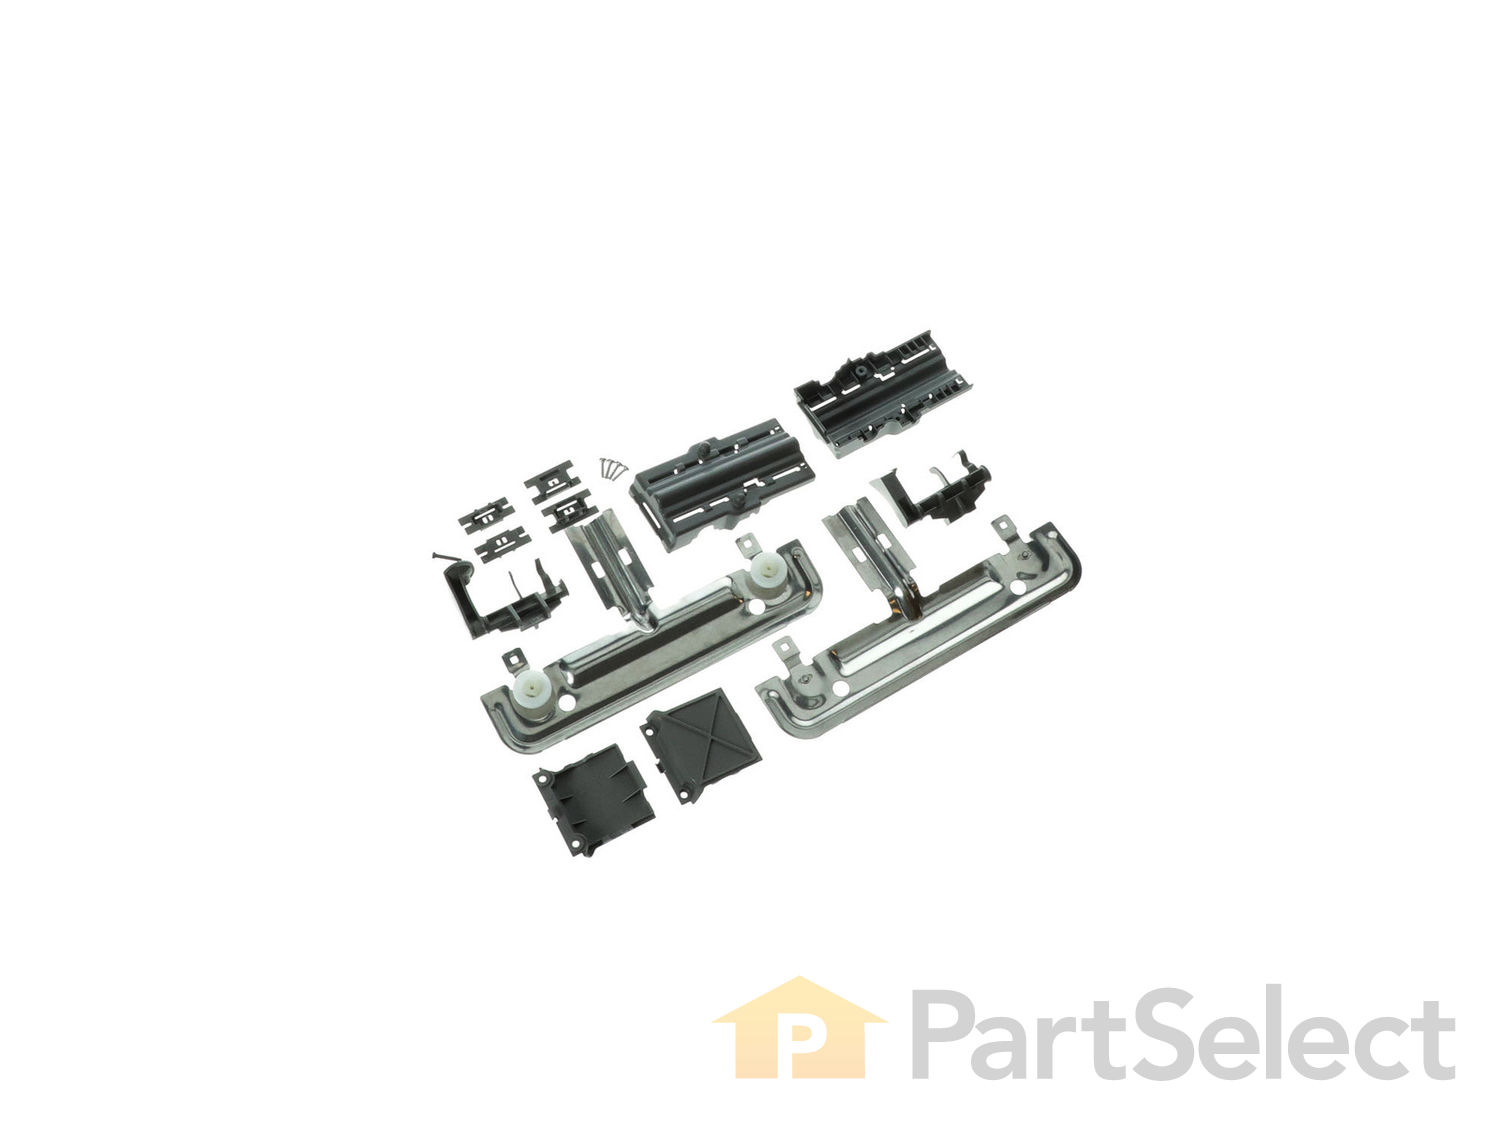 W10712394 Whirlpool Dishwasher Upper Rack Adjuster Kit